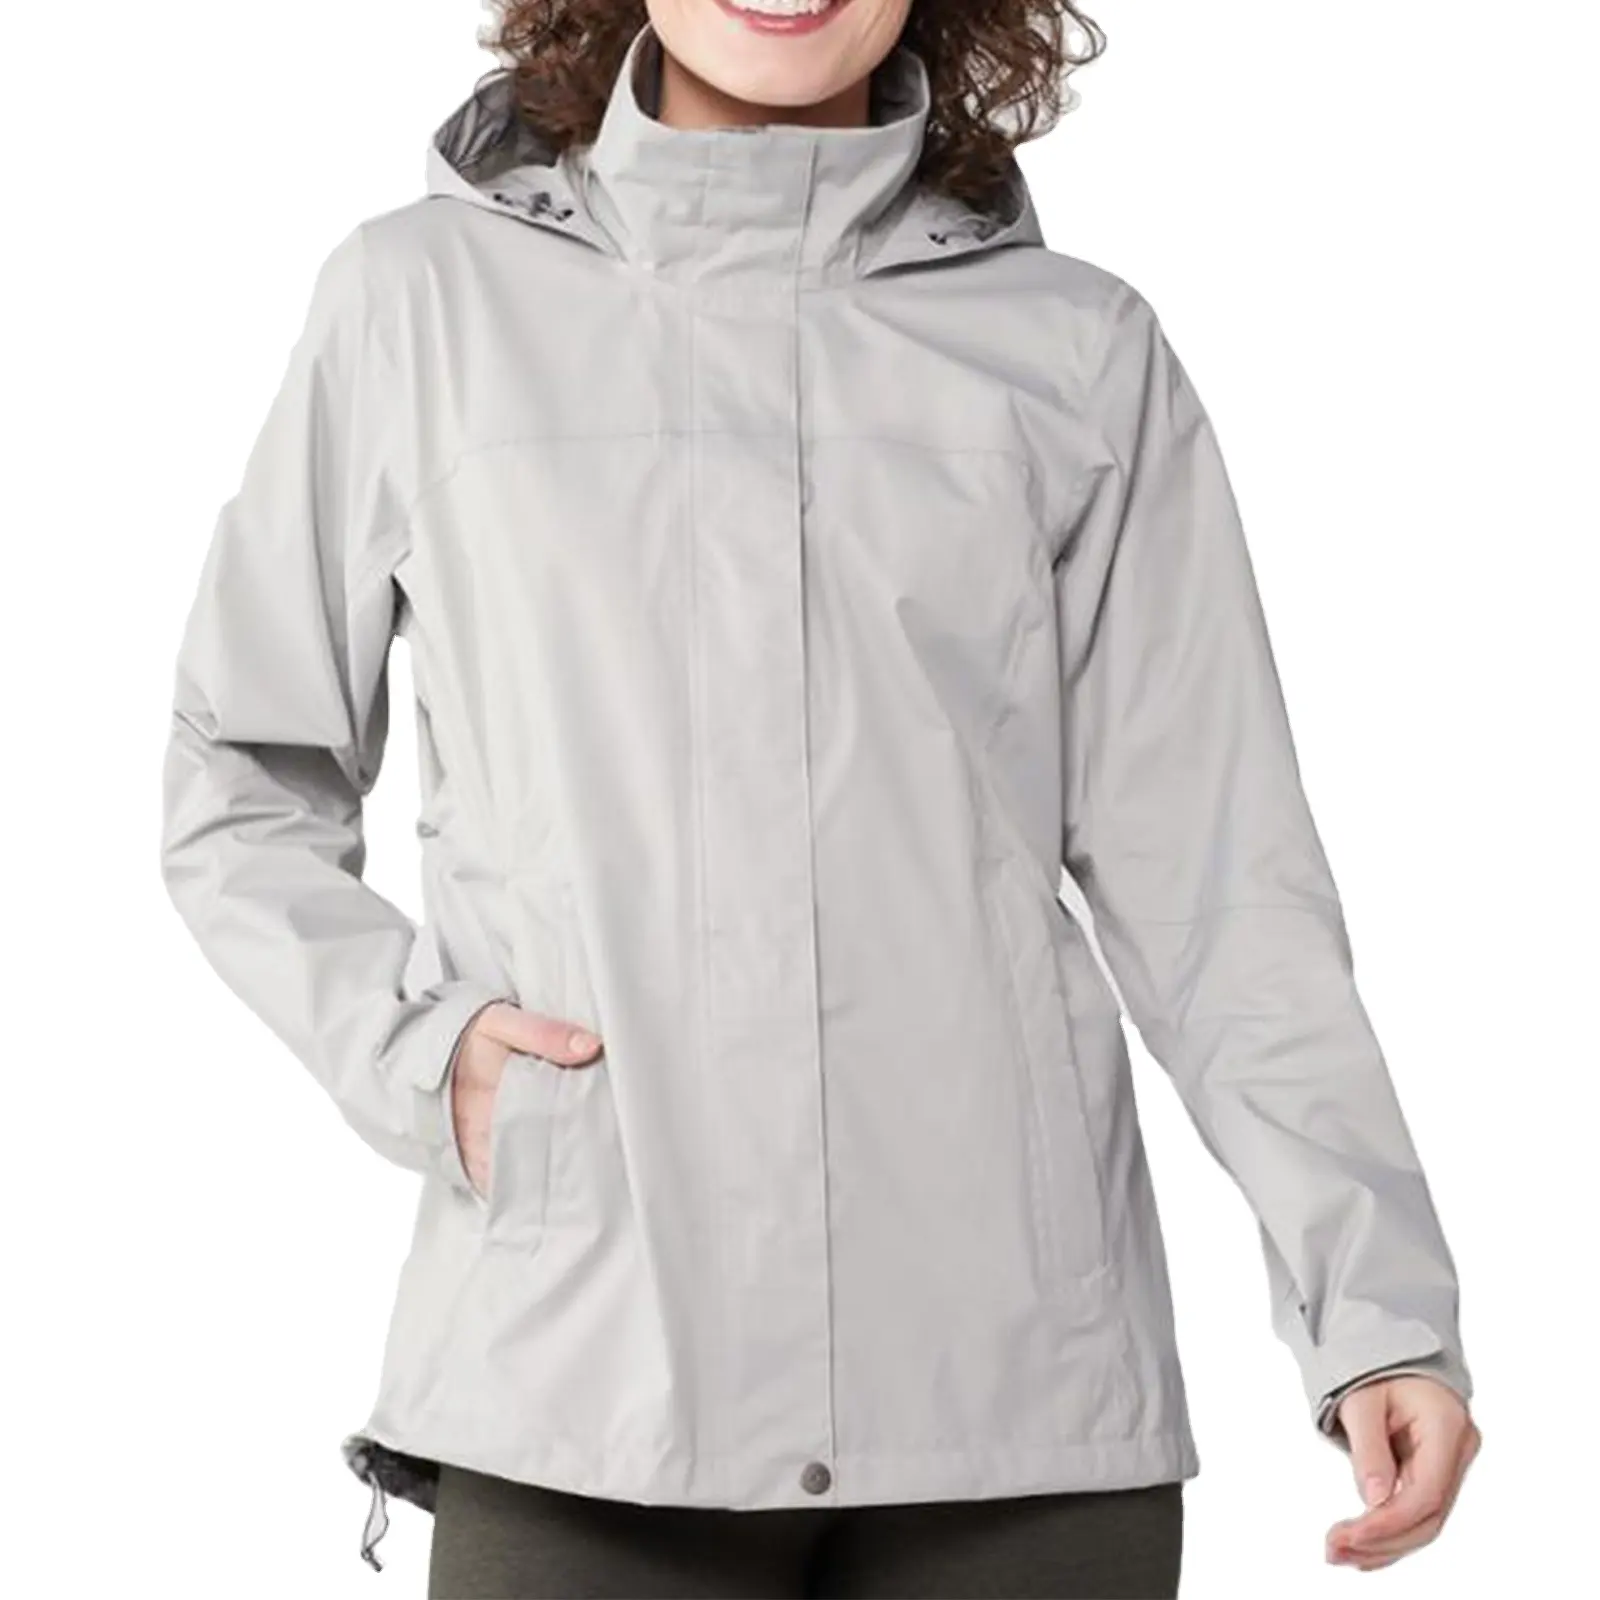 Women's jackets lightweight hiking jacket windproof and waterproof slim fit mountain outdoor wear camping rain coat